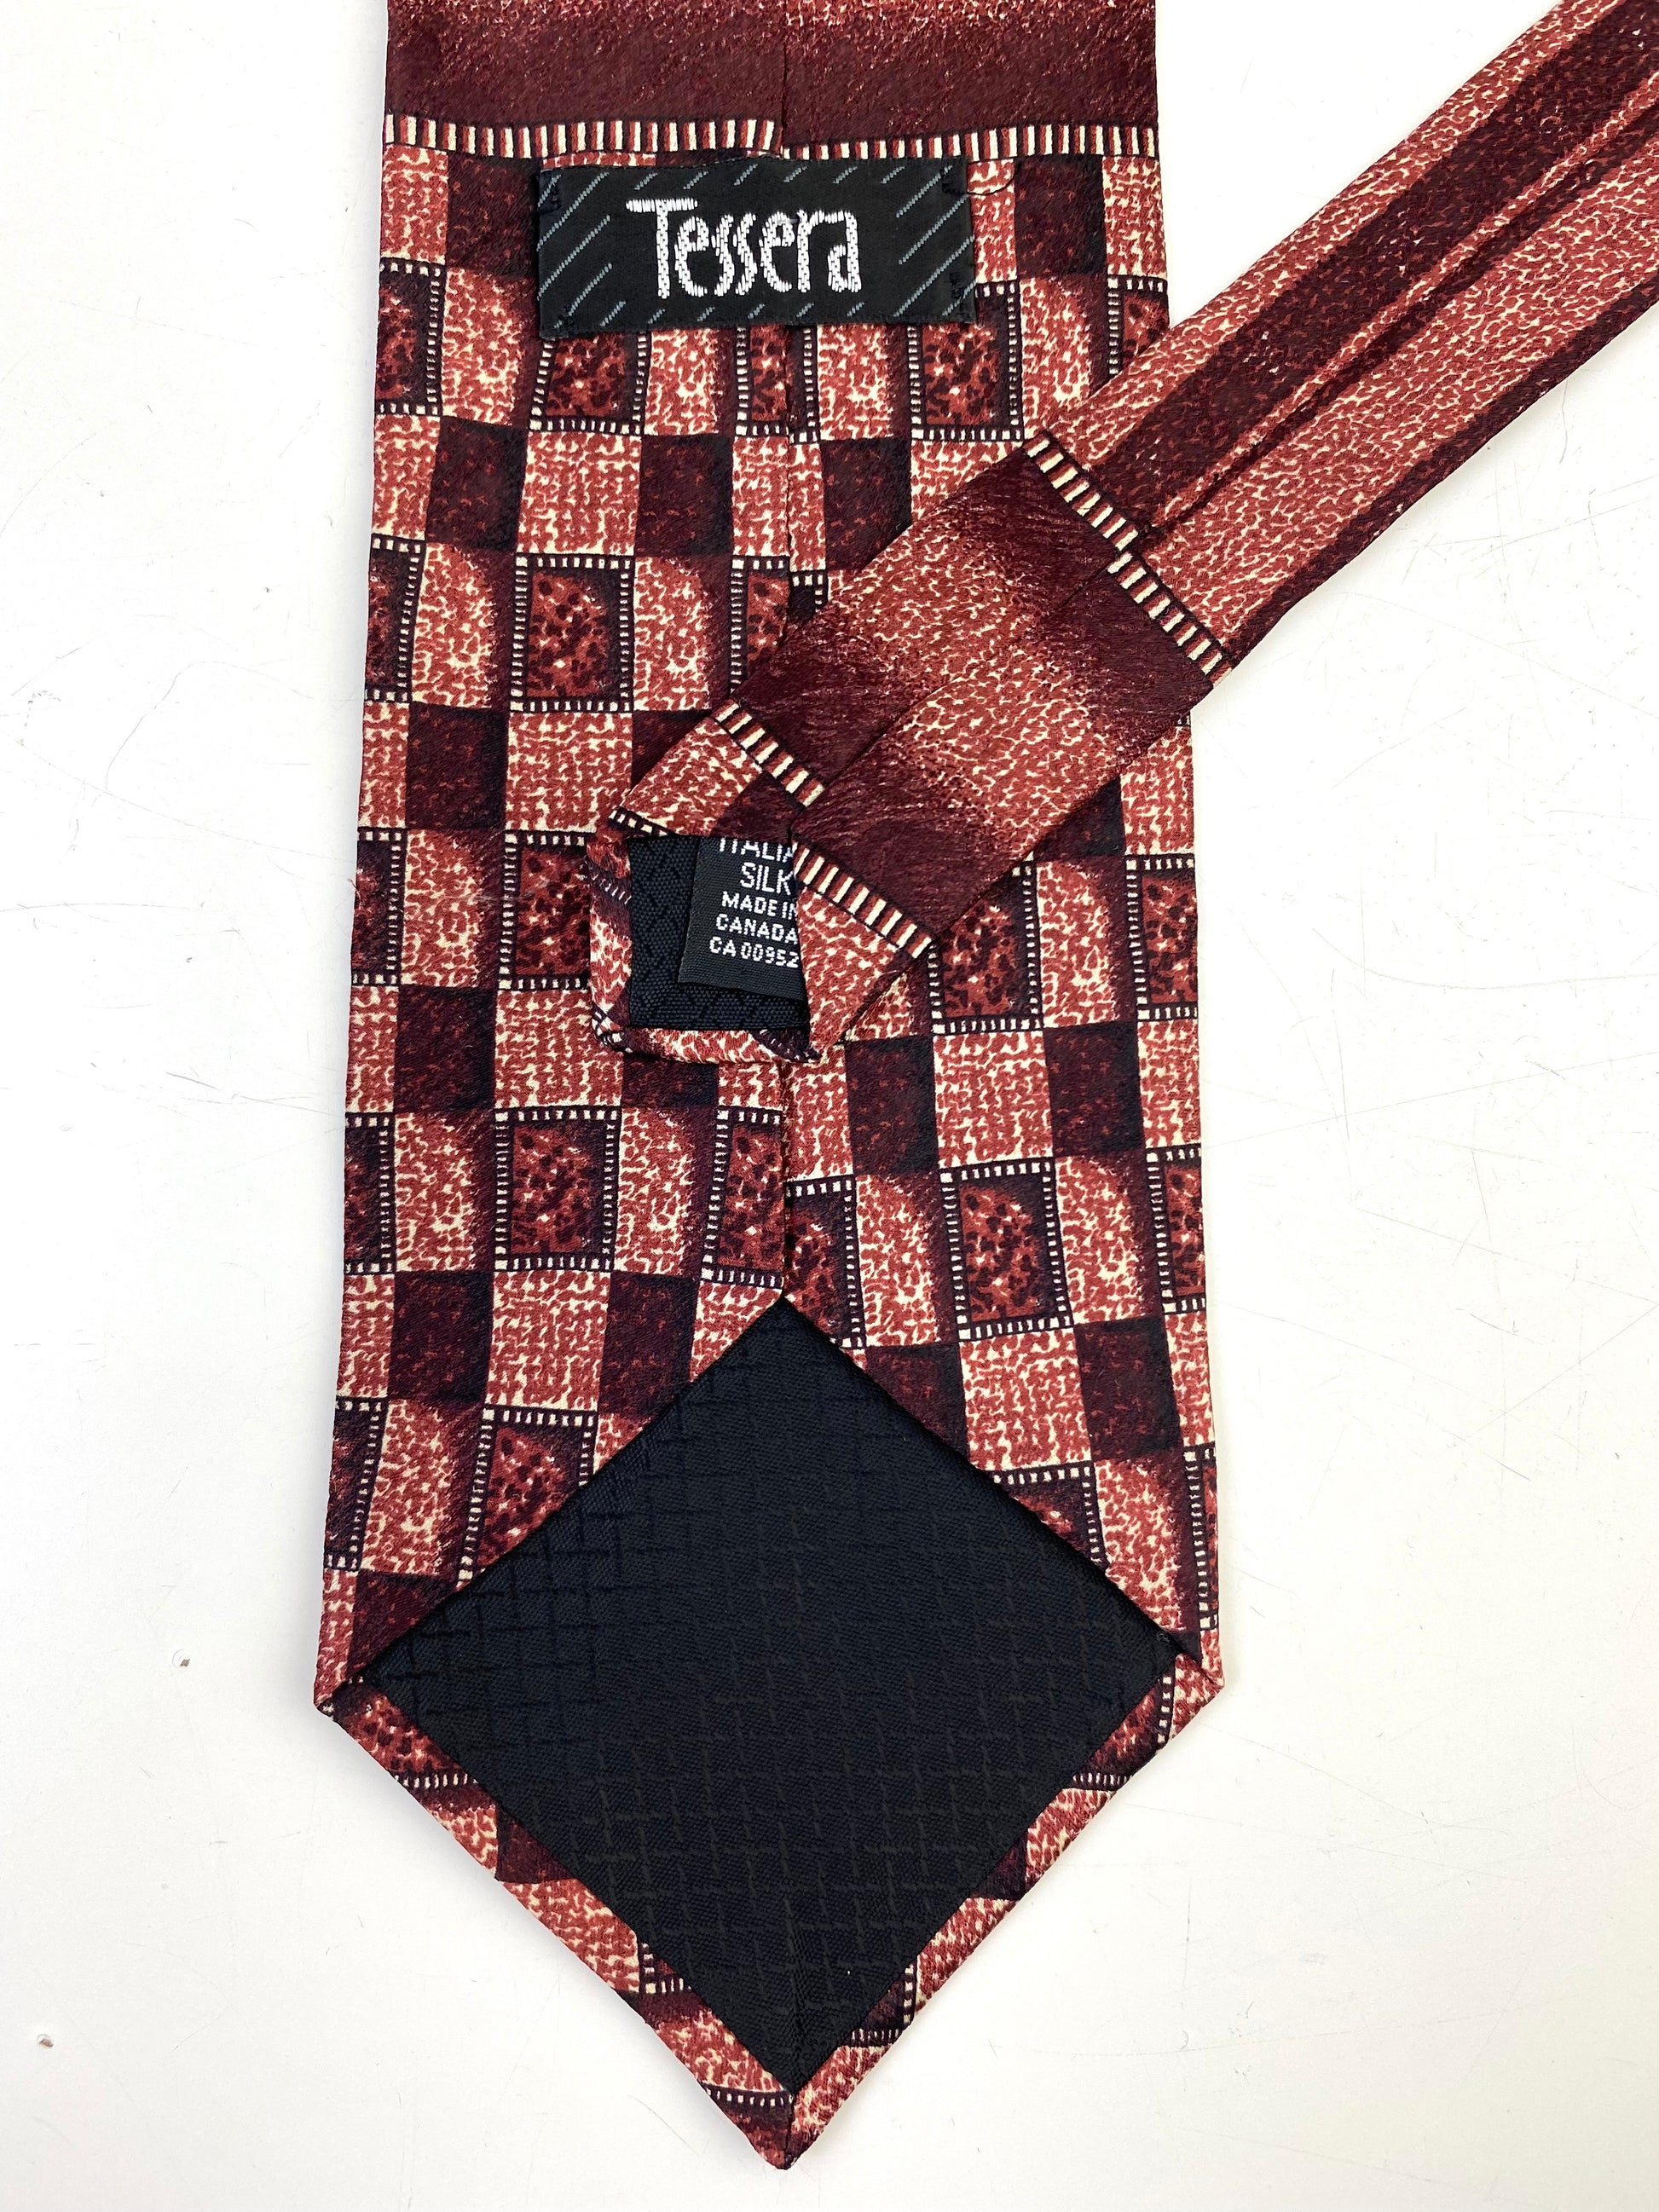 Back and labels of: 90s Deadstock Silk Necktie, Men's Vintage Wine Check & Stripe Pattern Tie, NOS